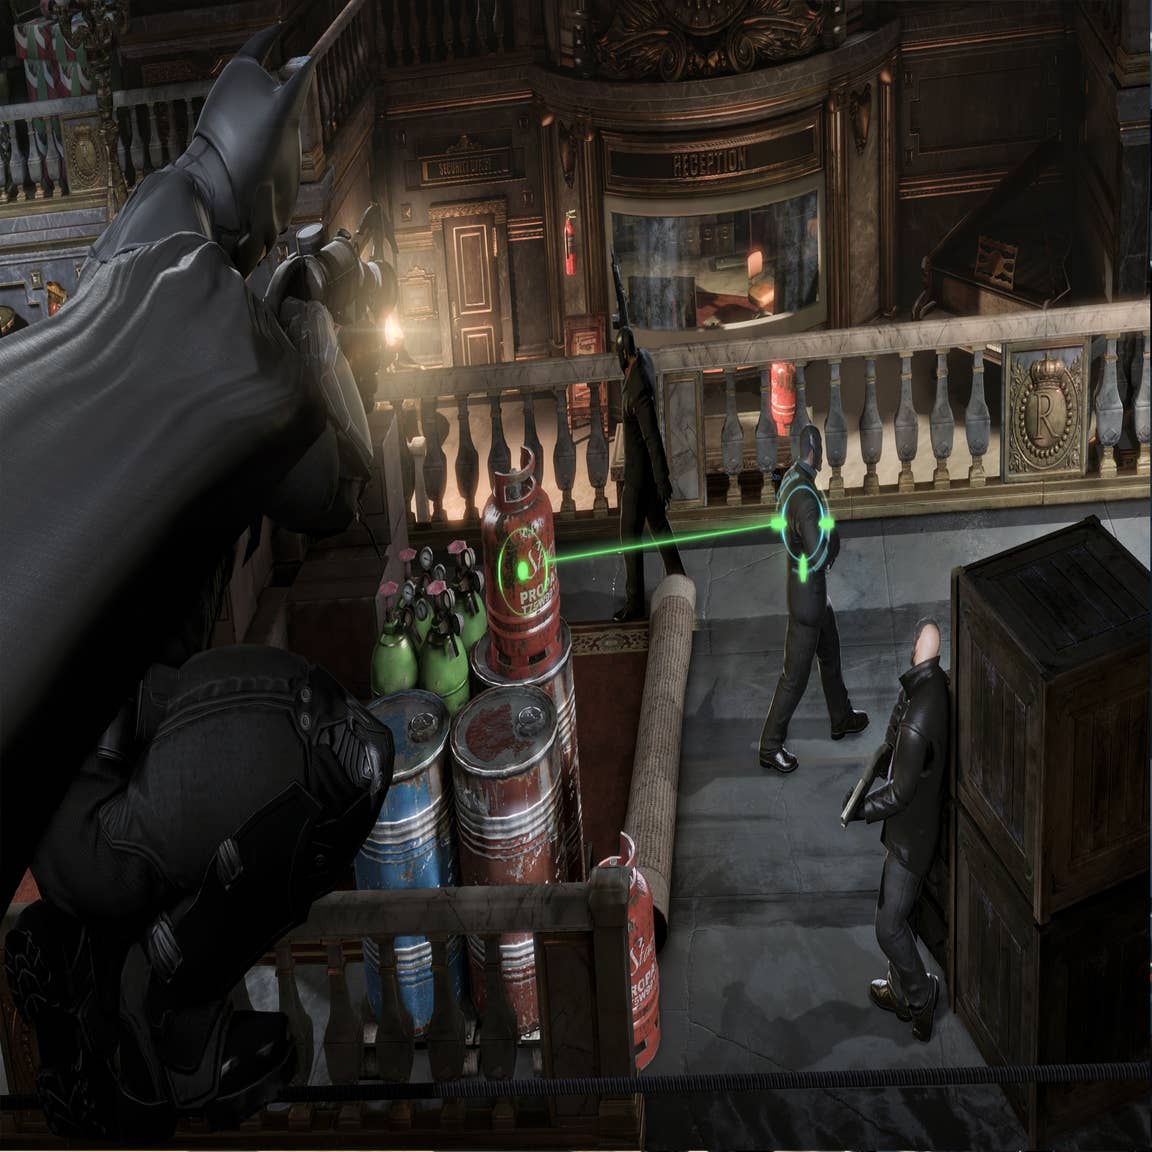 Arkham Origins Fans Have Restored The Game's Retired Multiplayer